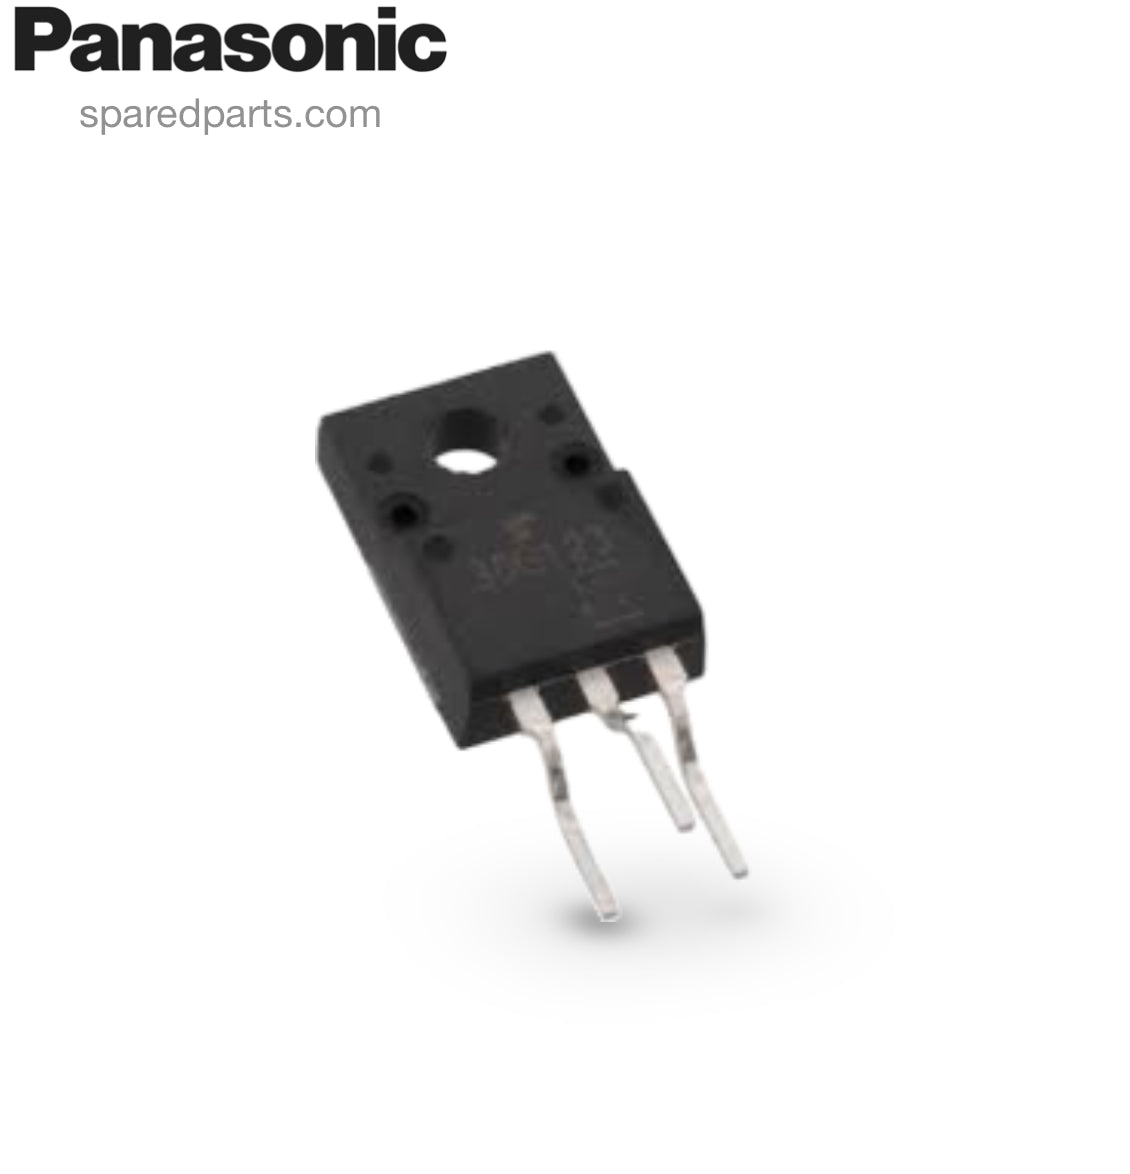 Panasonic 30G123 Transistor B1JADP000004